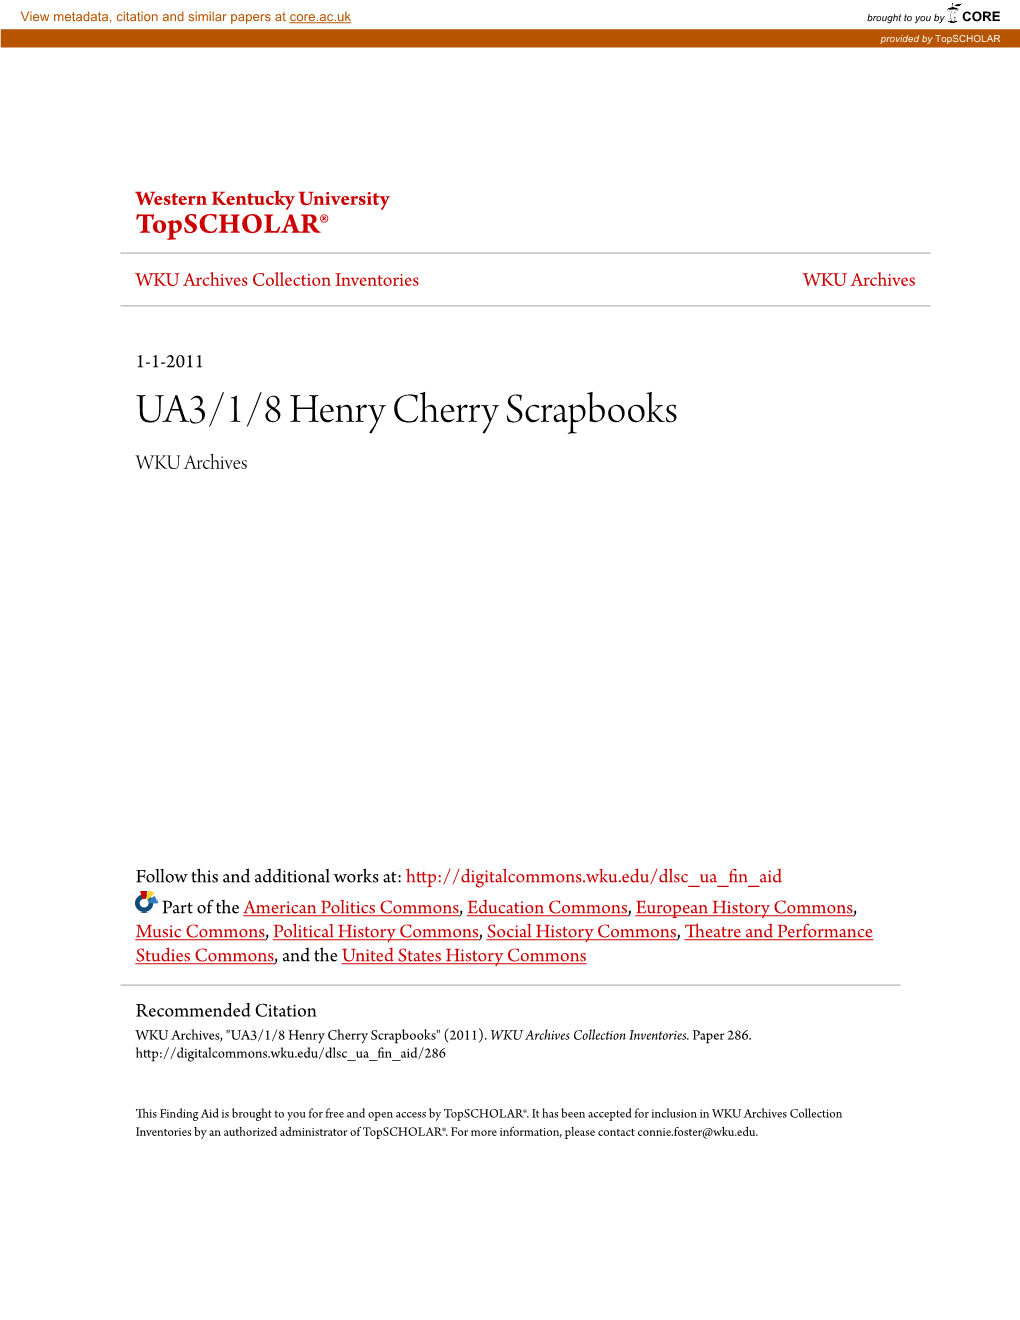 UA3/1/8 Henry Cherry Scrapbooks WKU Archives